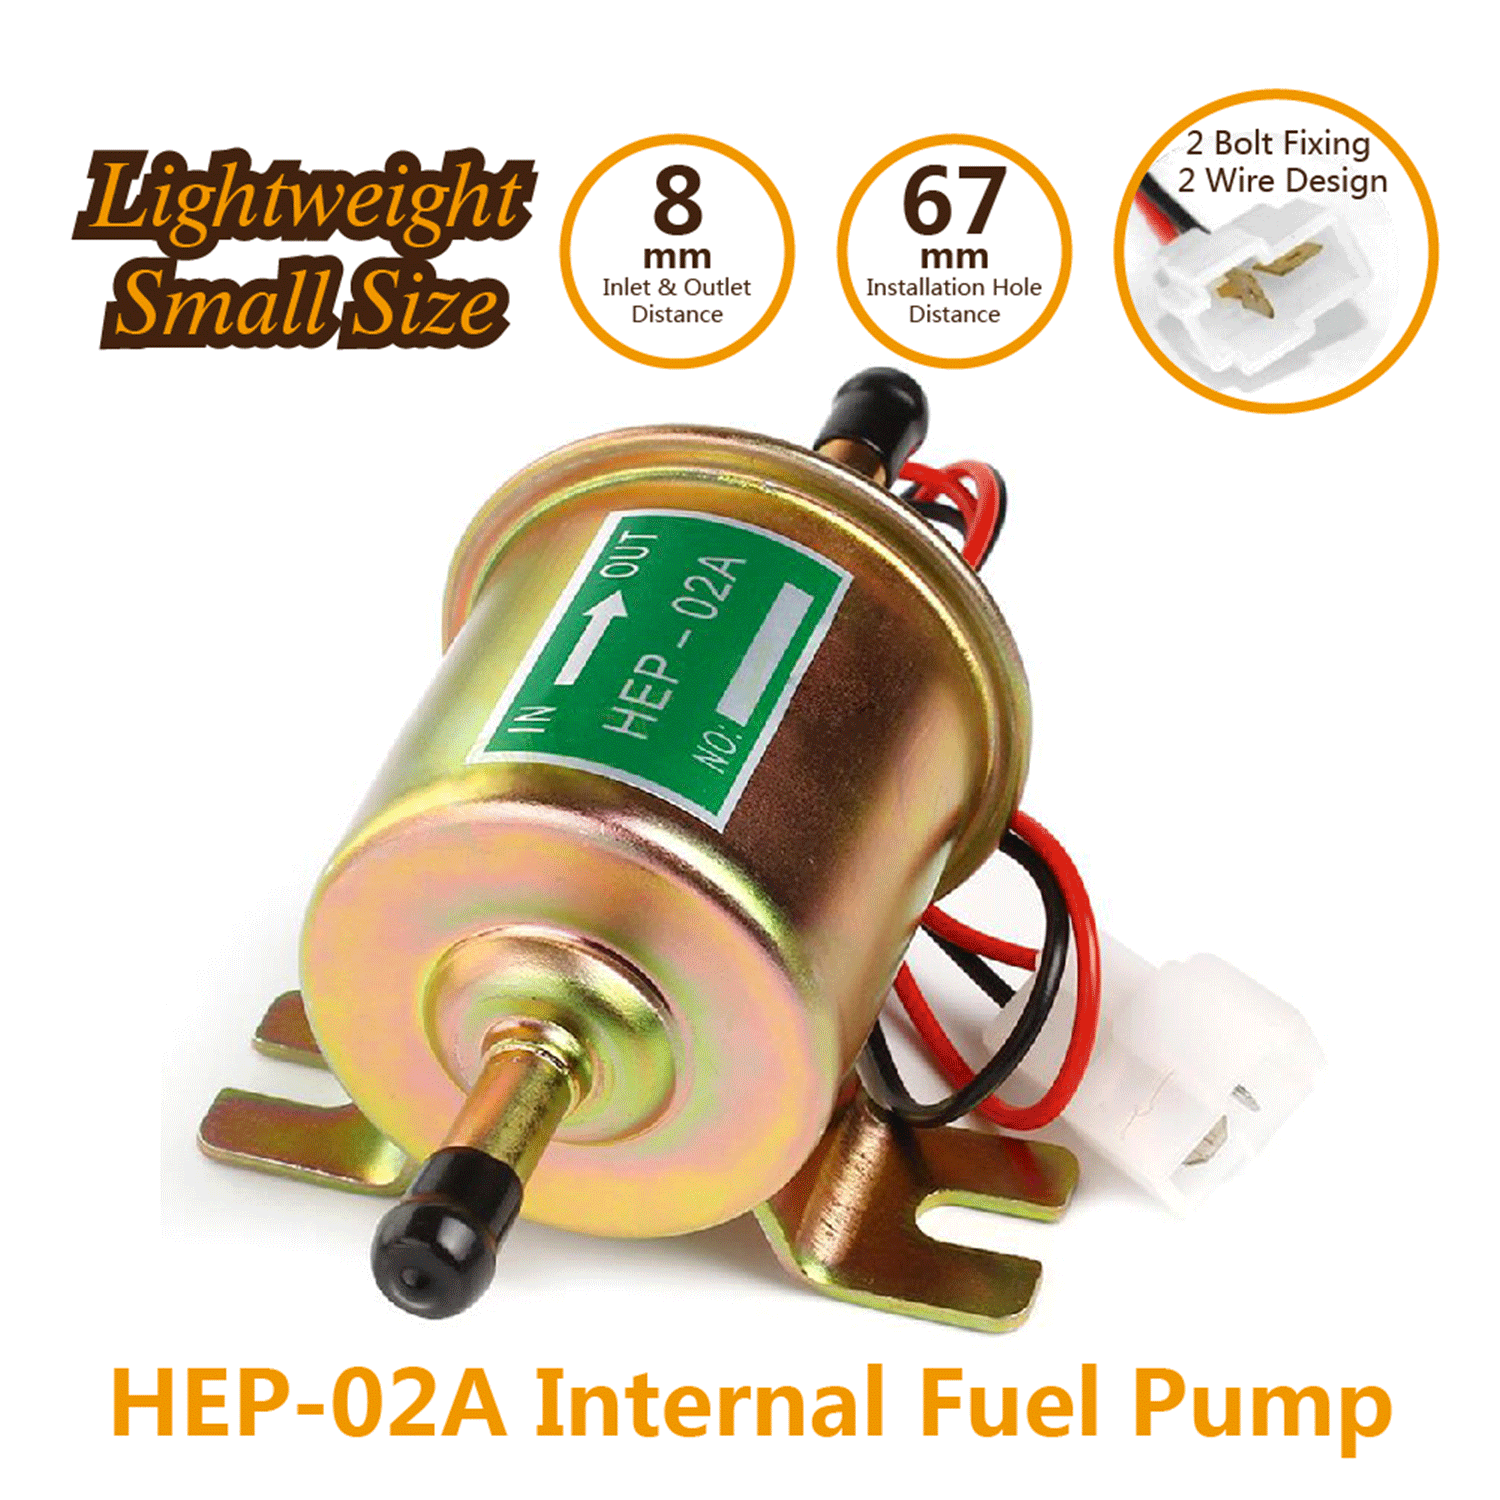 12V Universal Electric Petrol Gas Diesel Fuel Pump Low Pressure for Toyota Mazda